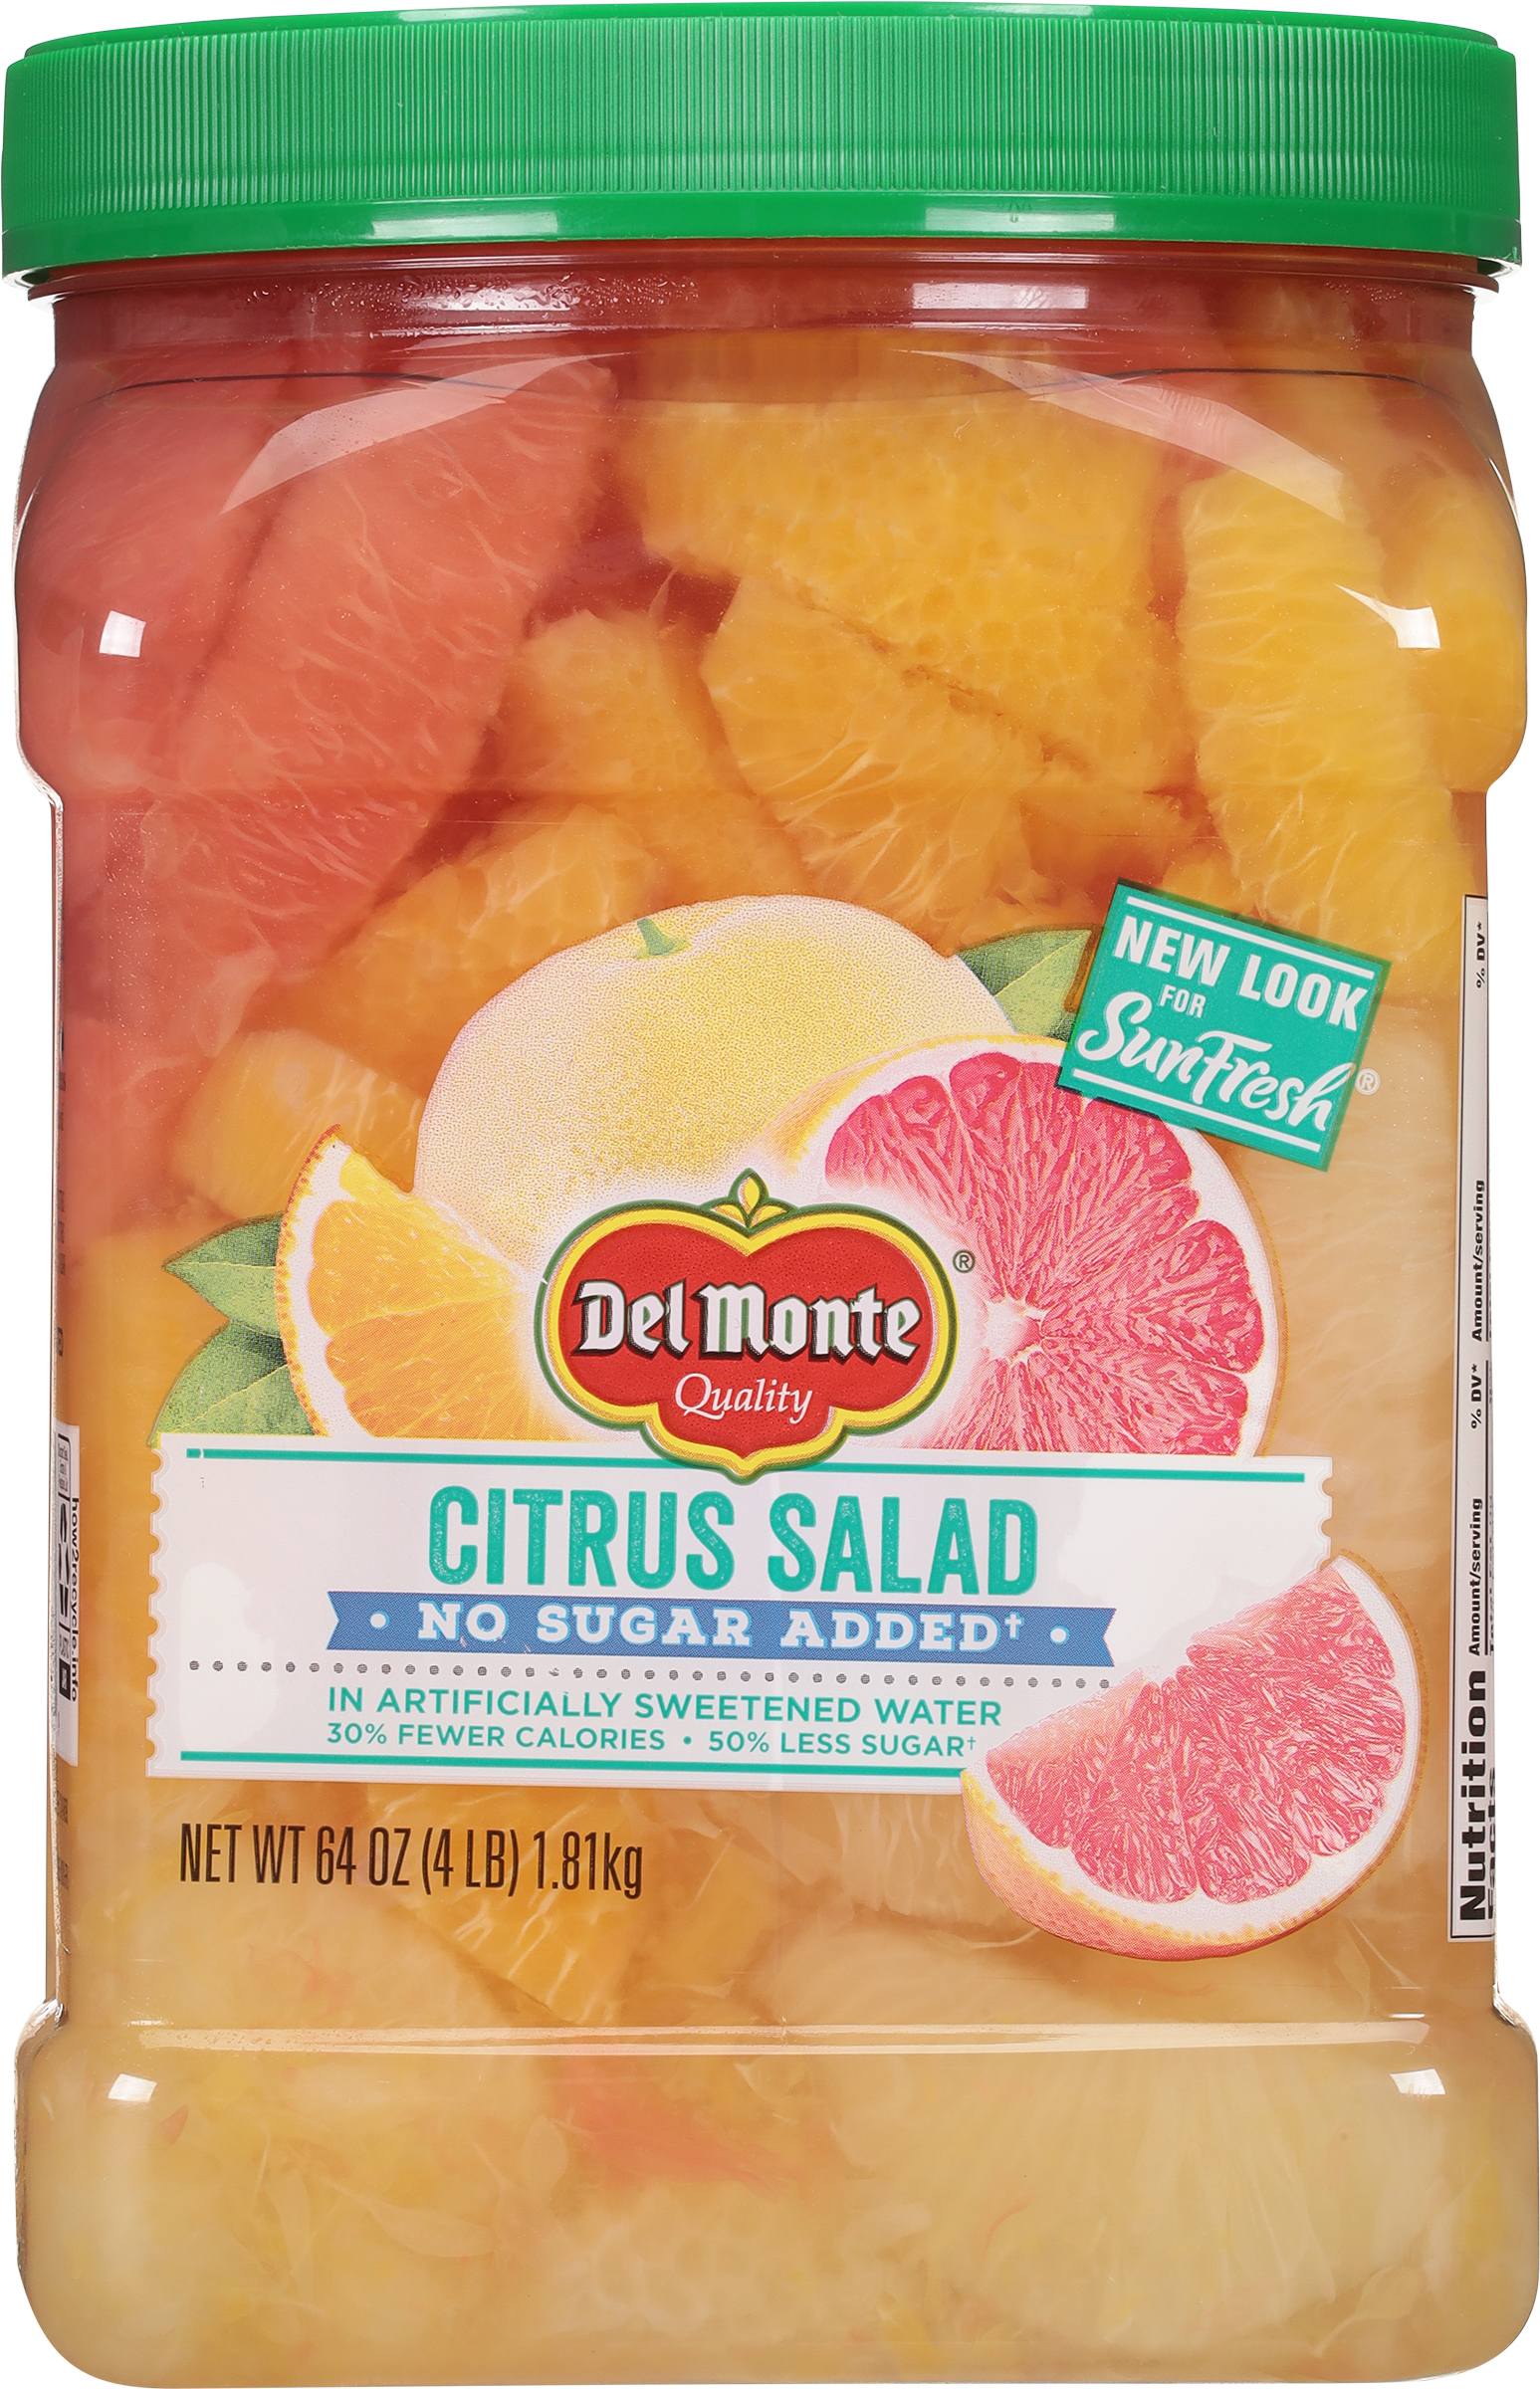 Citrus Salad, No Sugar Added image